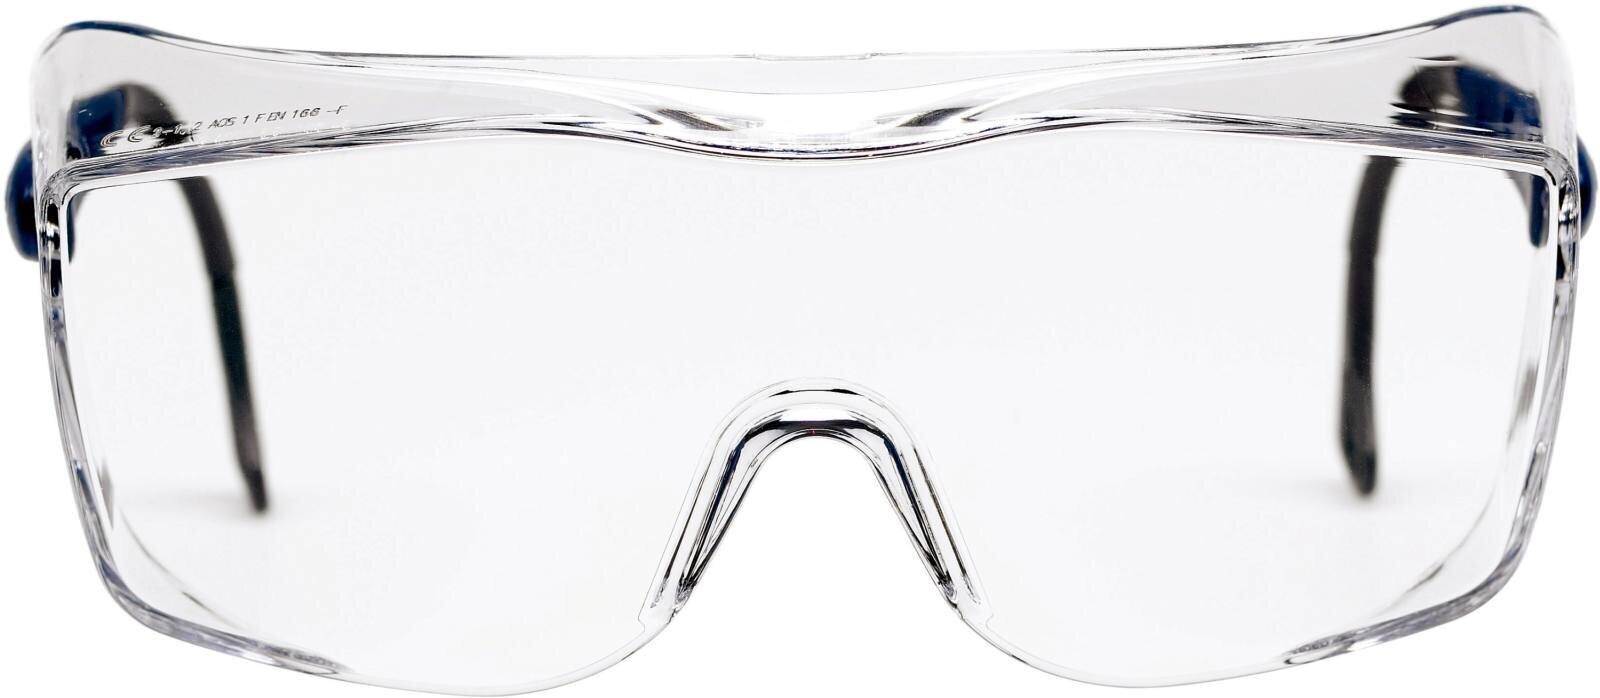 3M OX2000 bril, anti-kras/anti-fog coating, heldere lens, 17-5118-2040